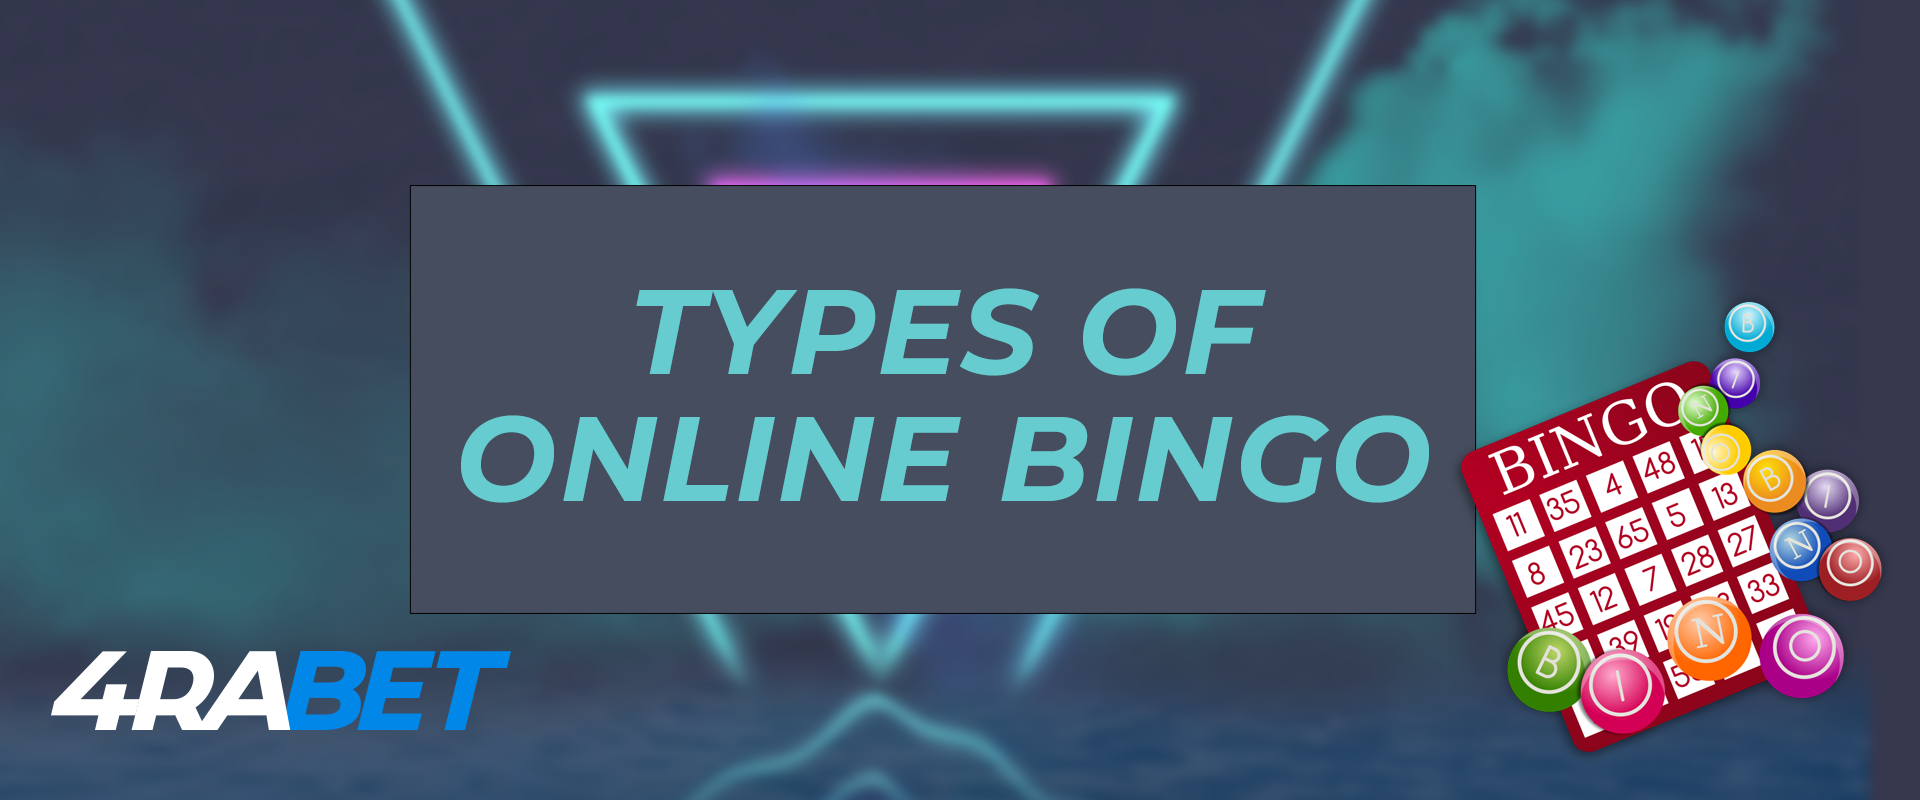 All types of online bingo on the 4rabet.